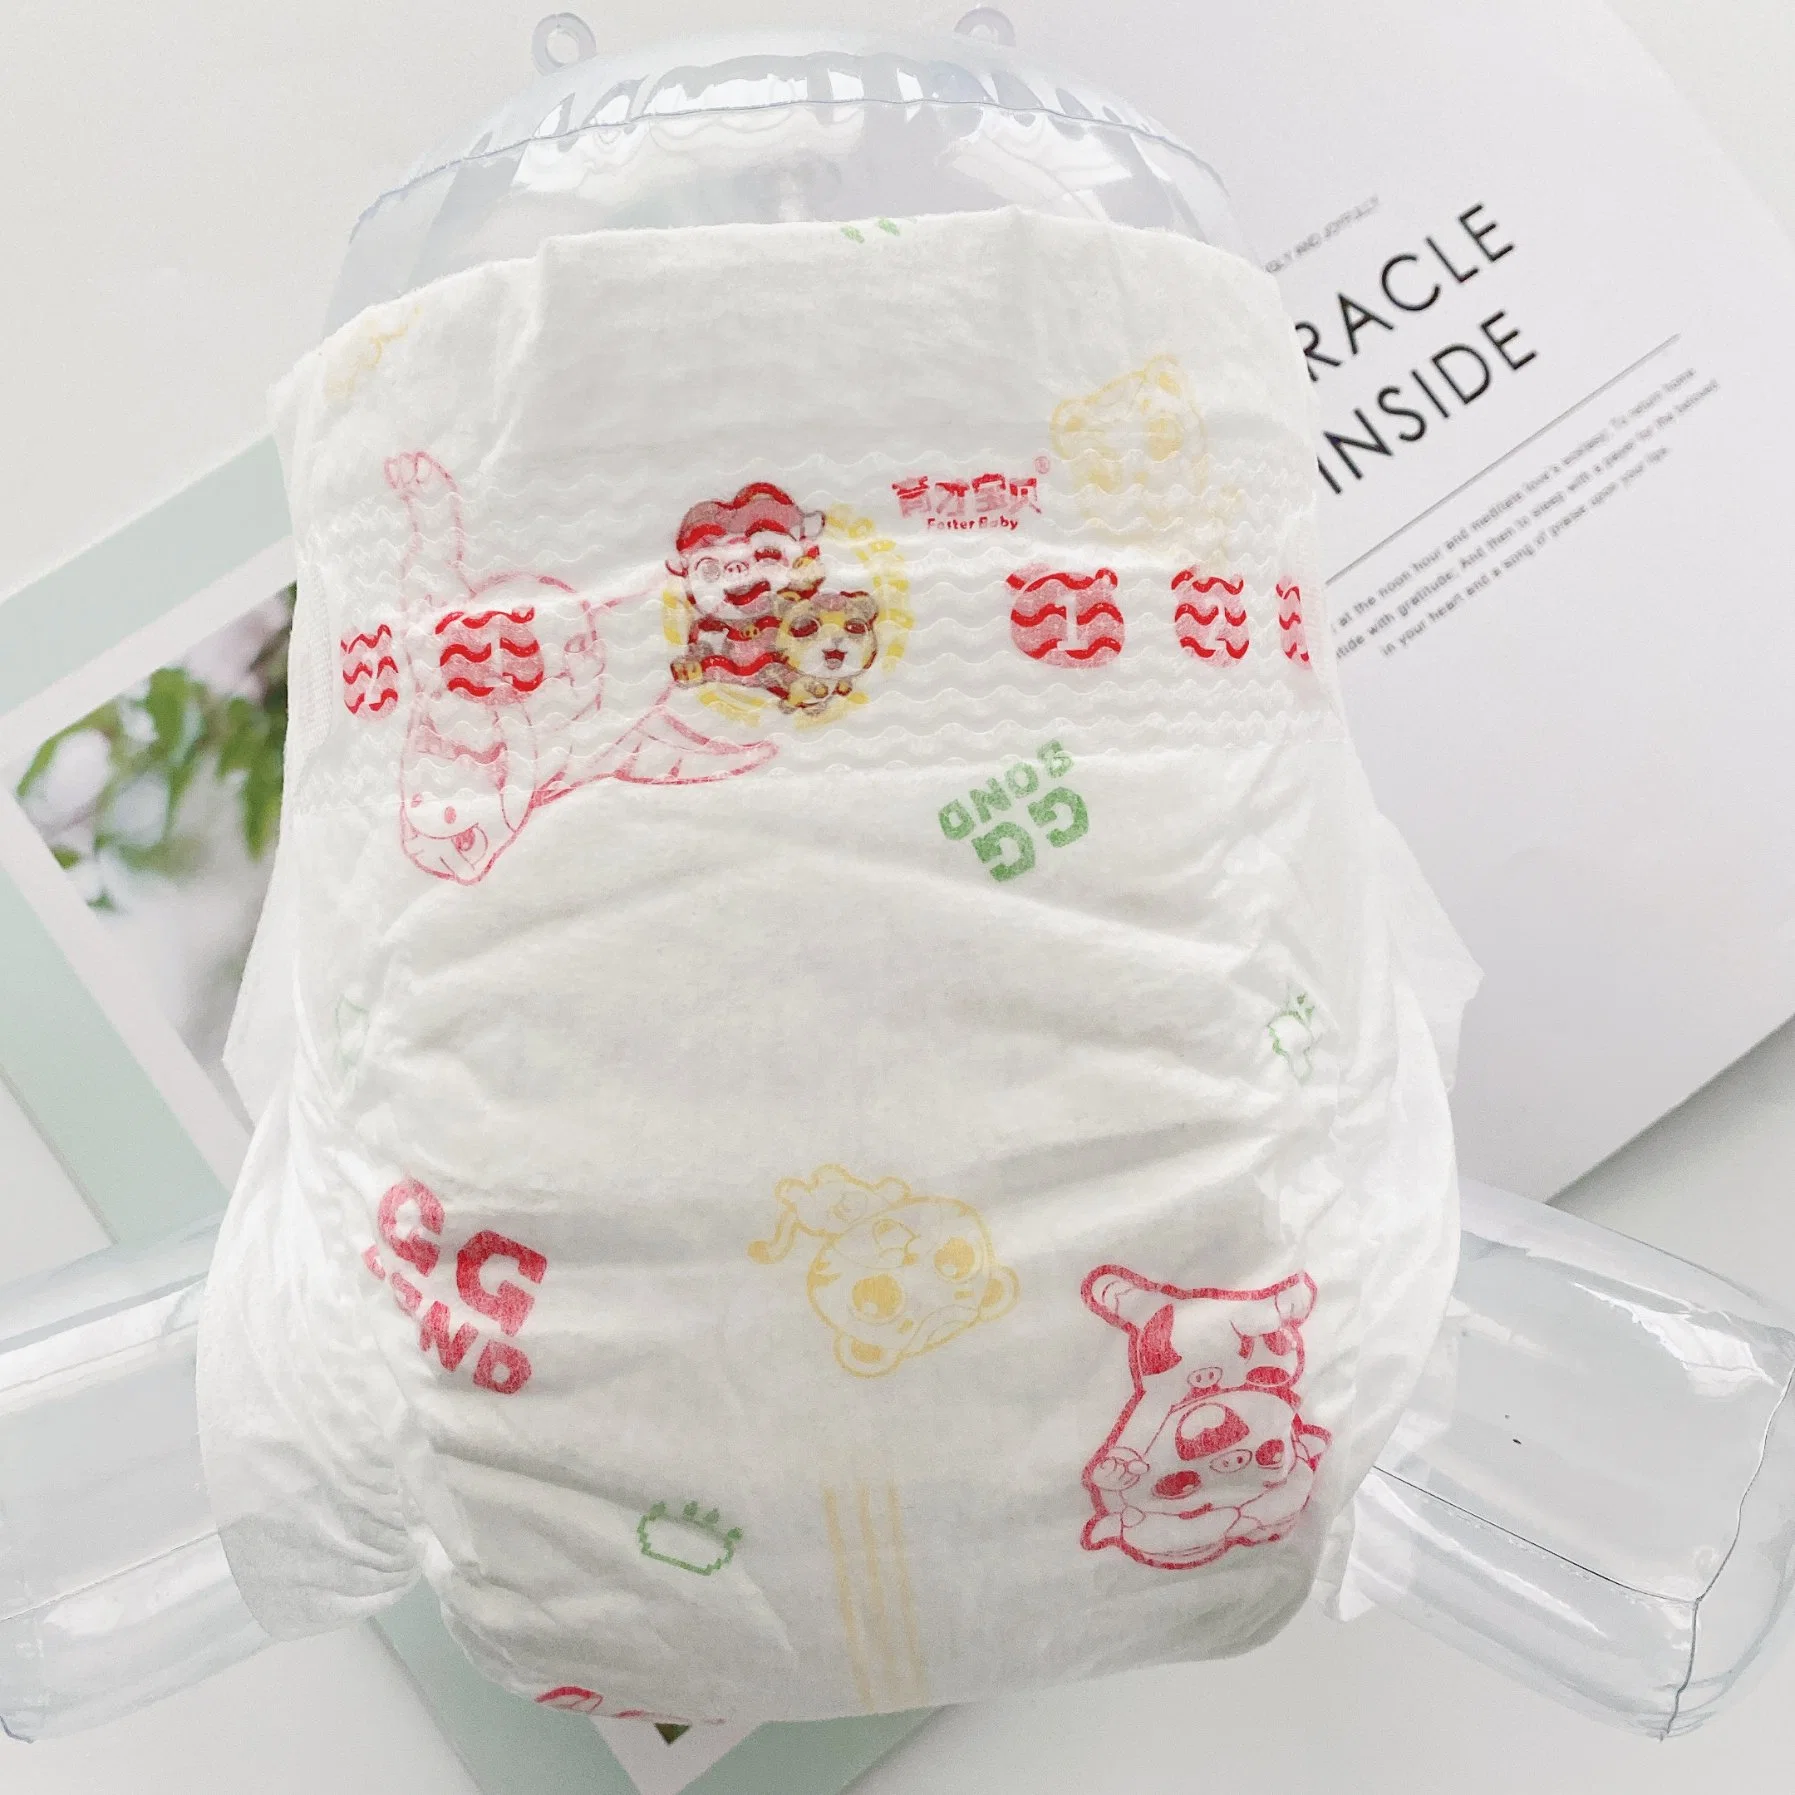 Baby Diaper Super Soft and Economy Item